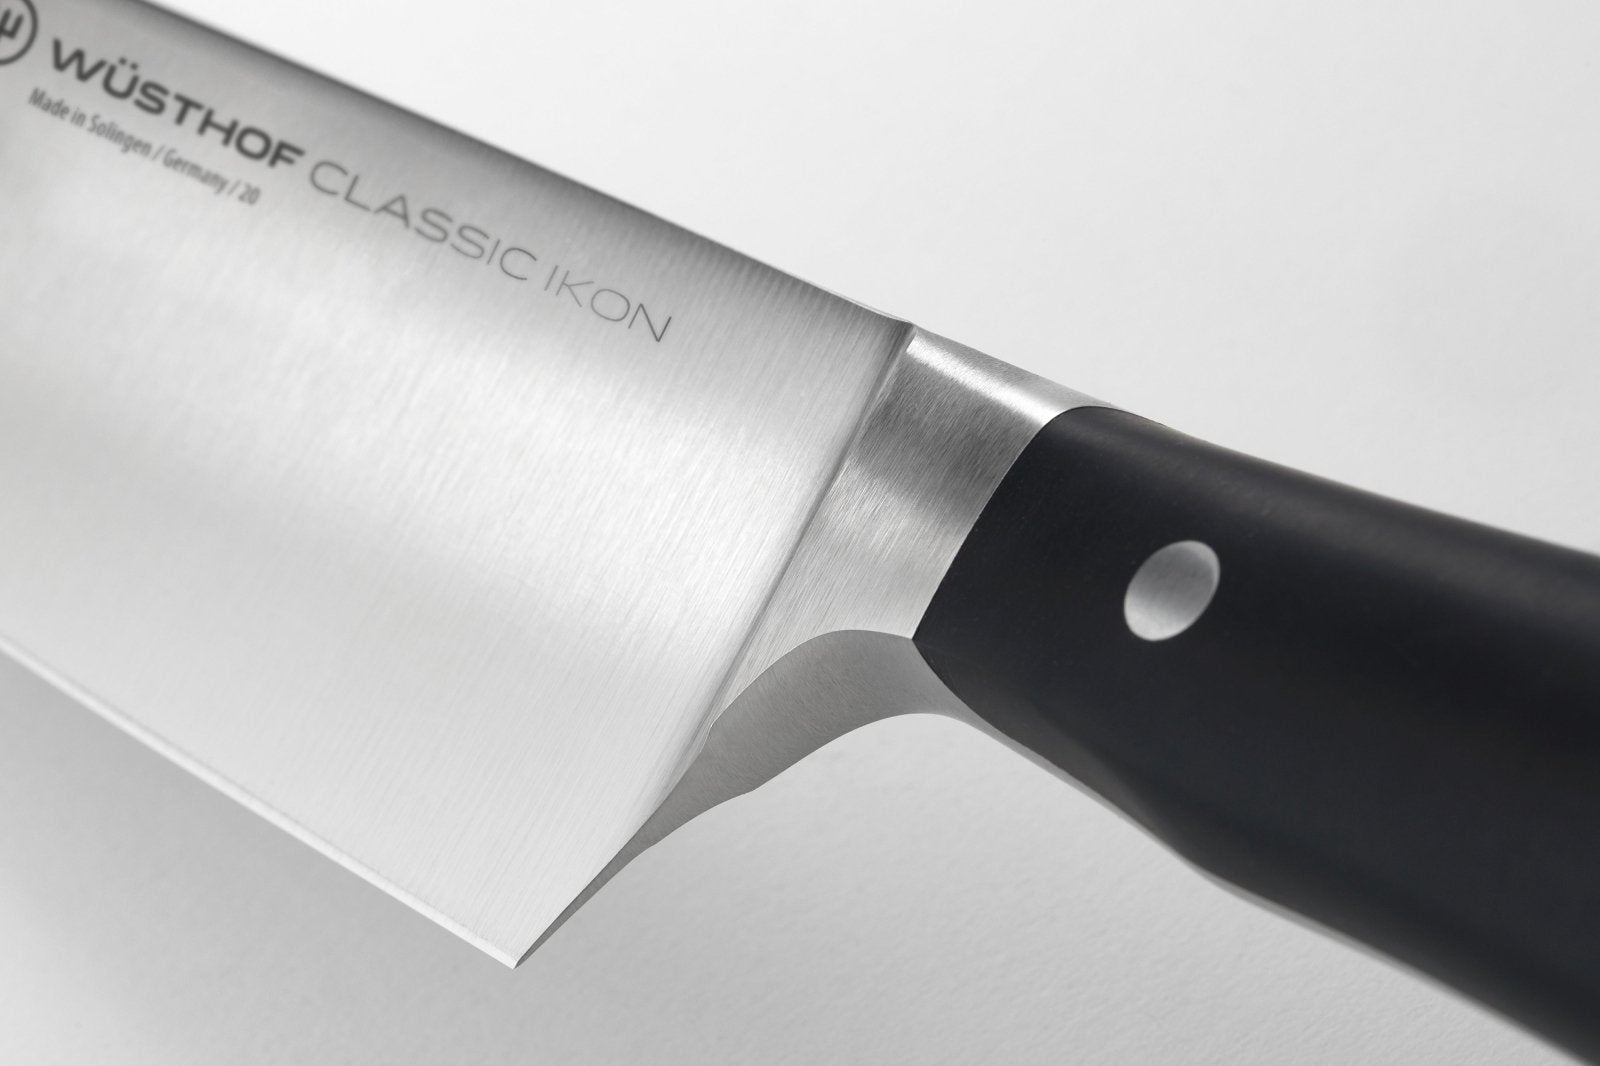 Wusthof Classic IKON 12cm Steak Knife - WT1040331712 - The Cotswold Knife Company